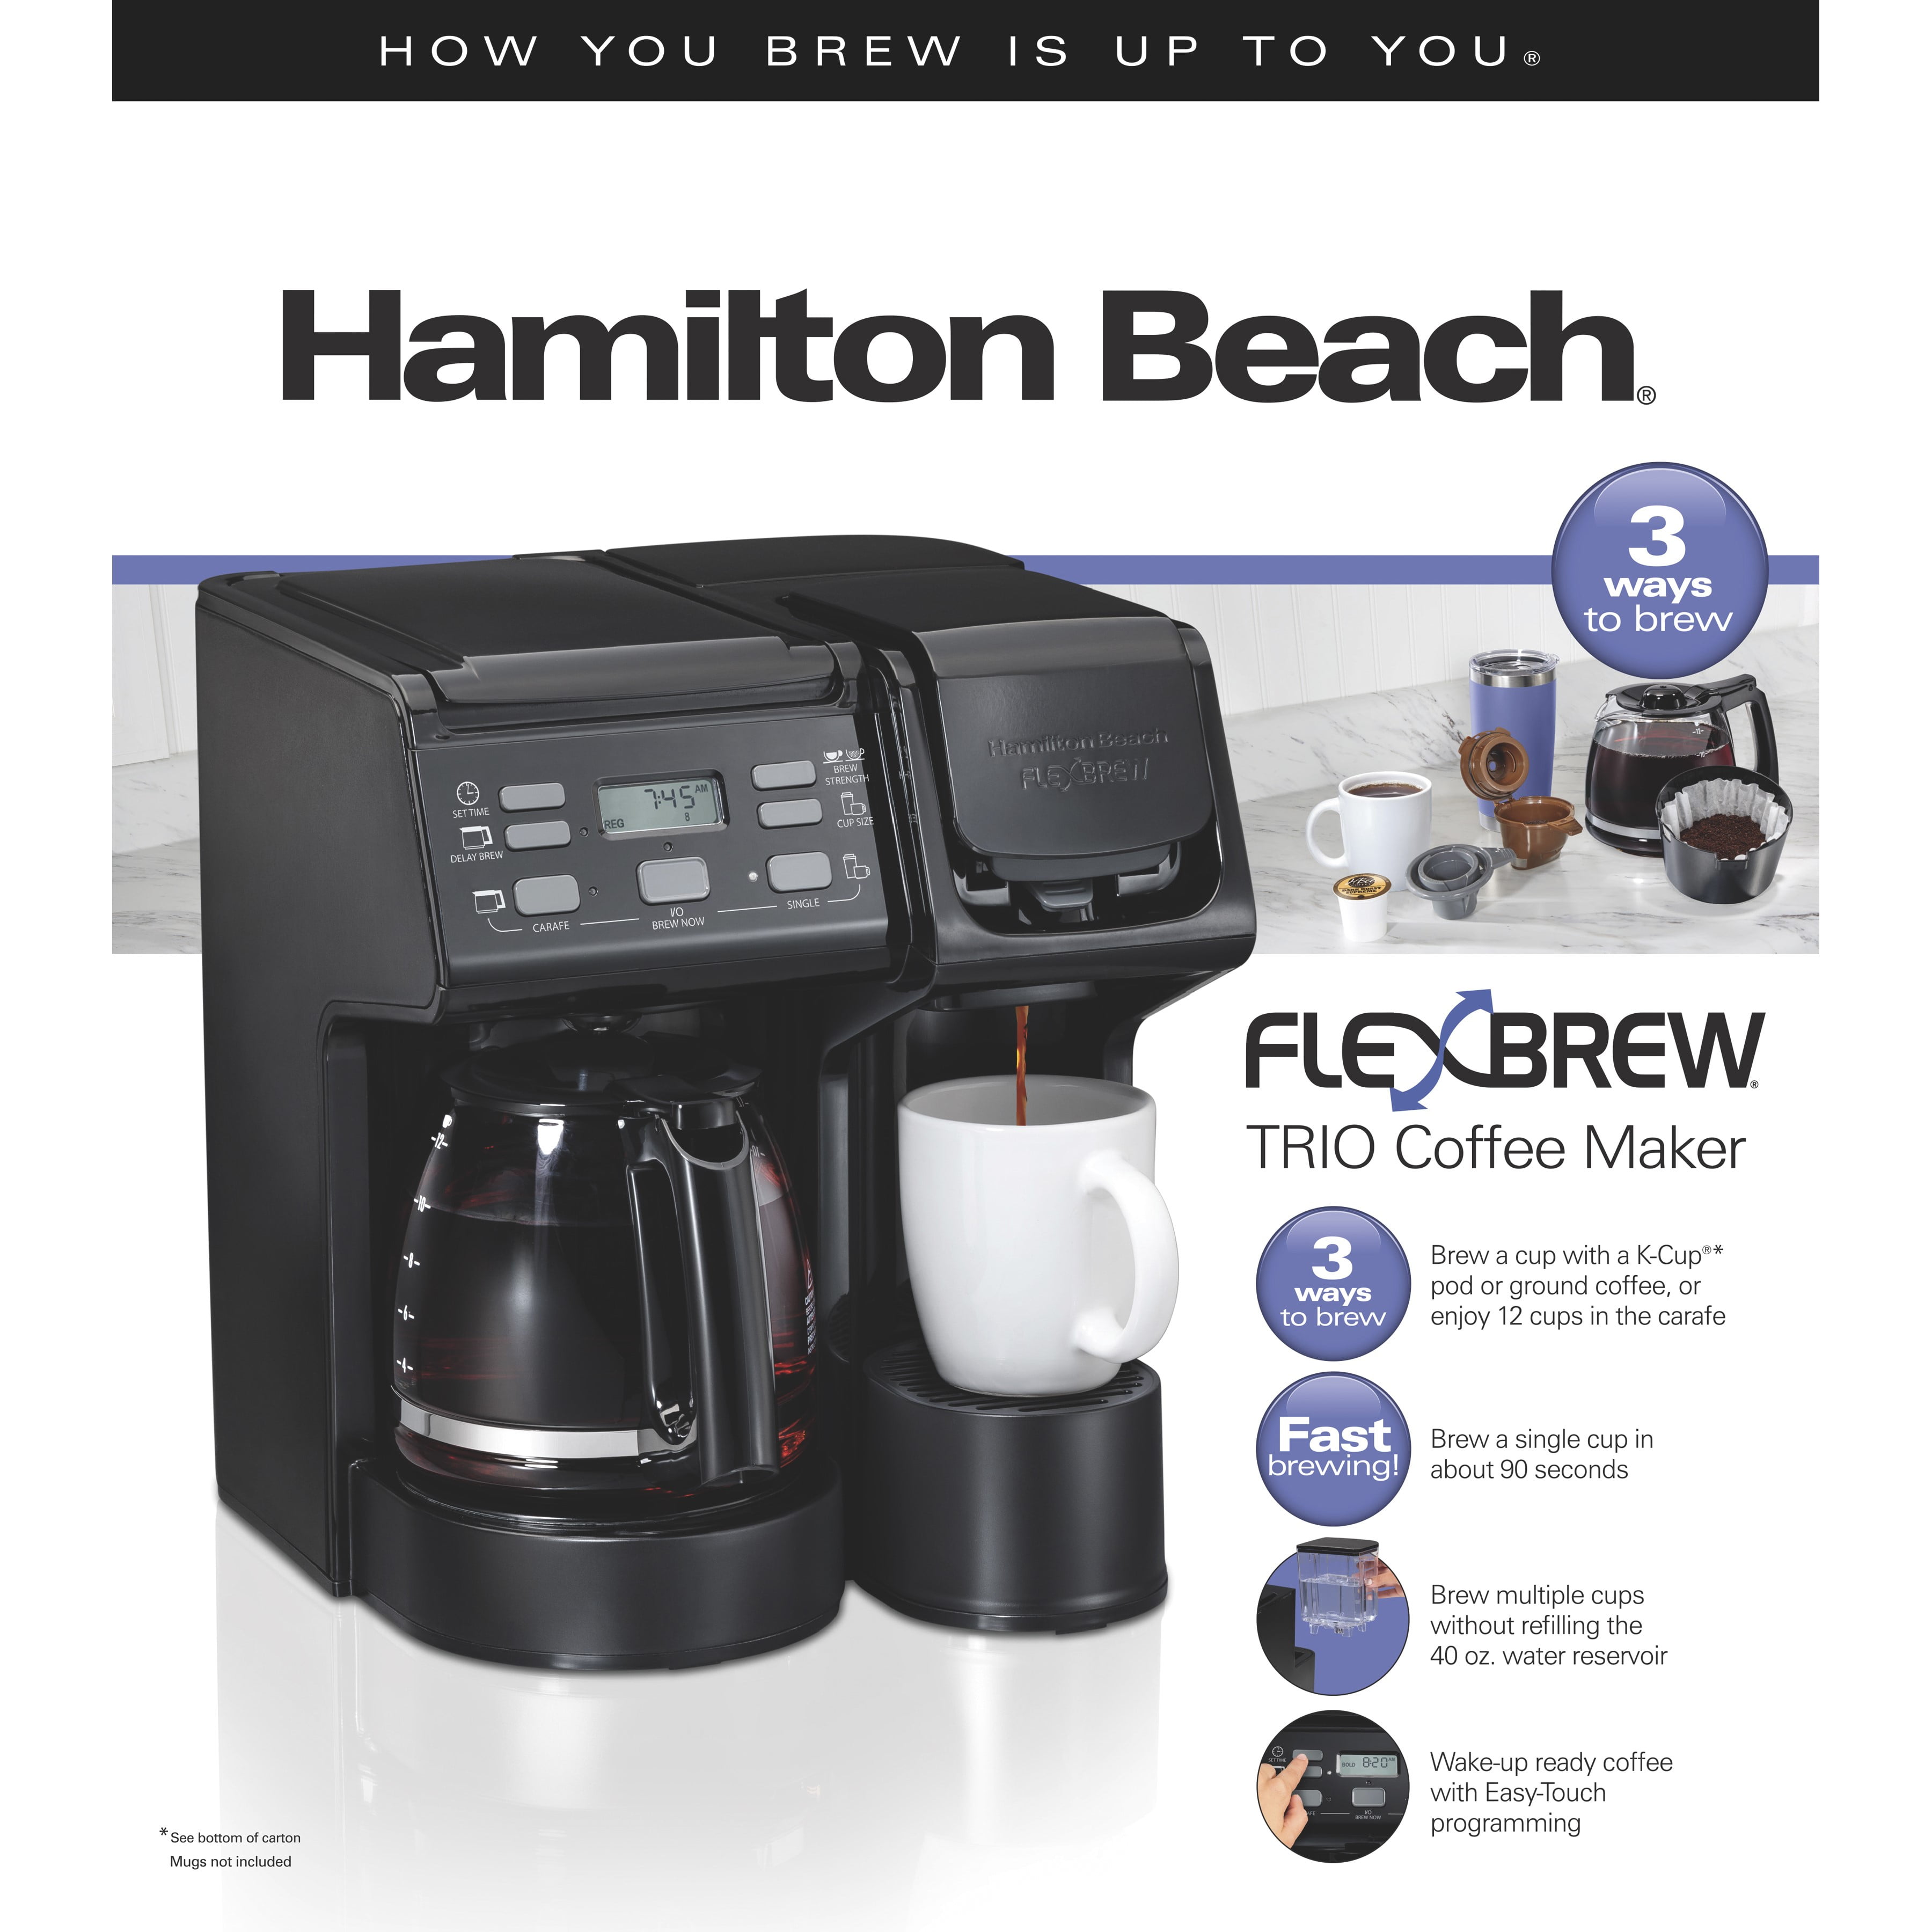 Hamilton Beach Flex Brew Trio Coffee Maker Reviews